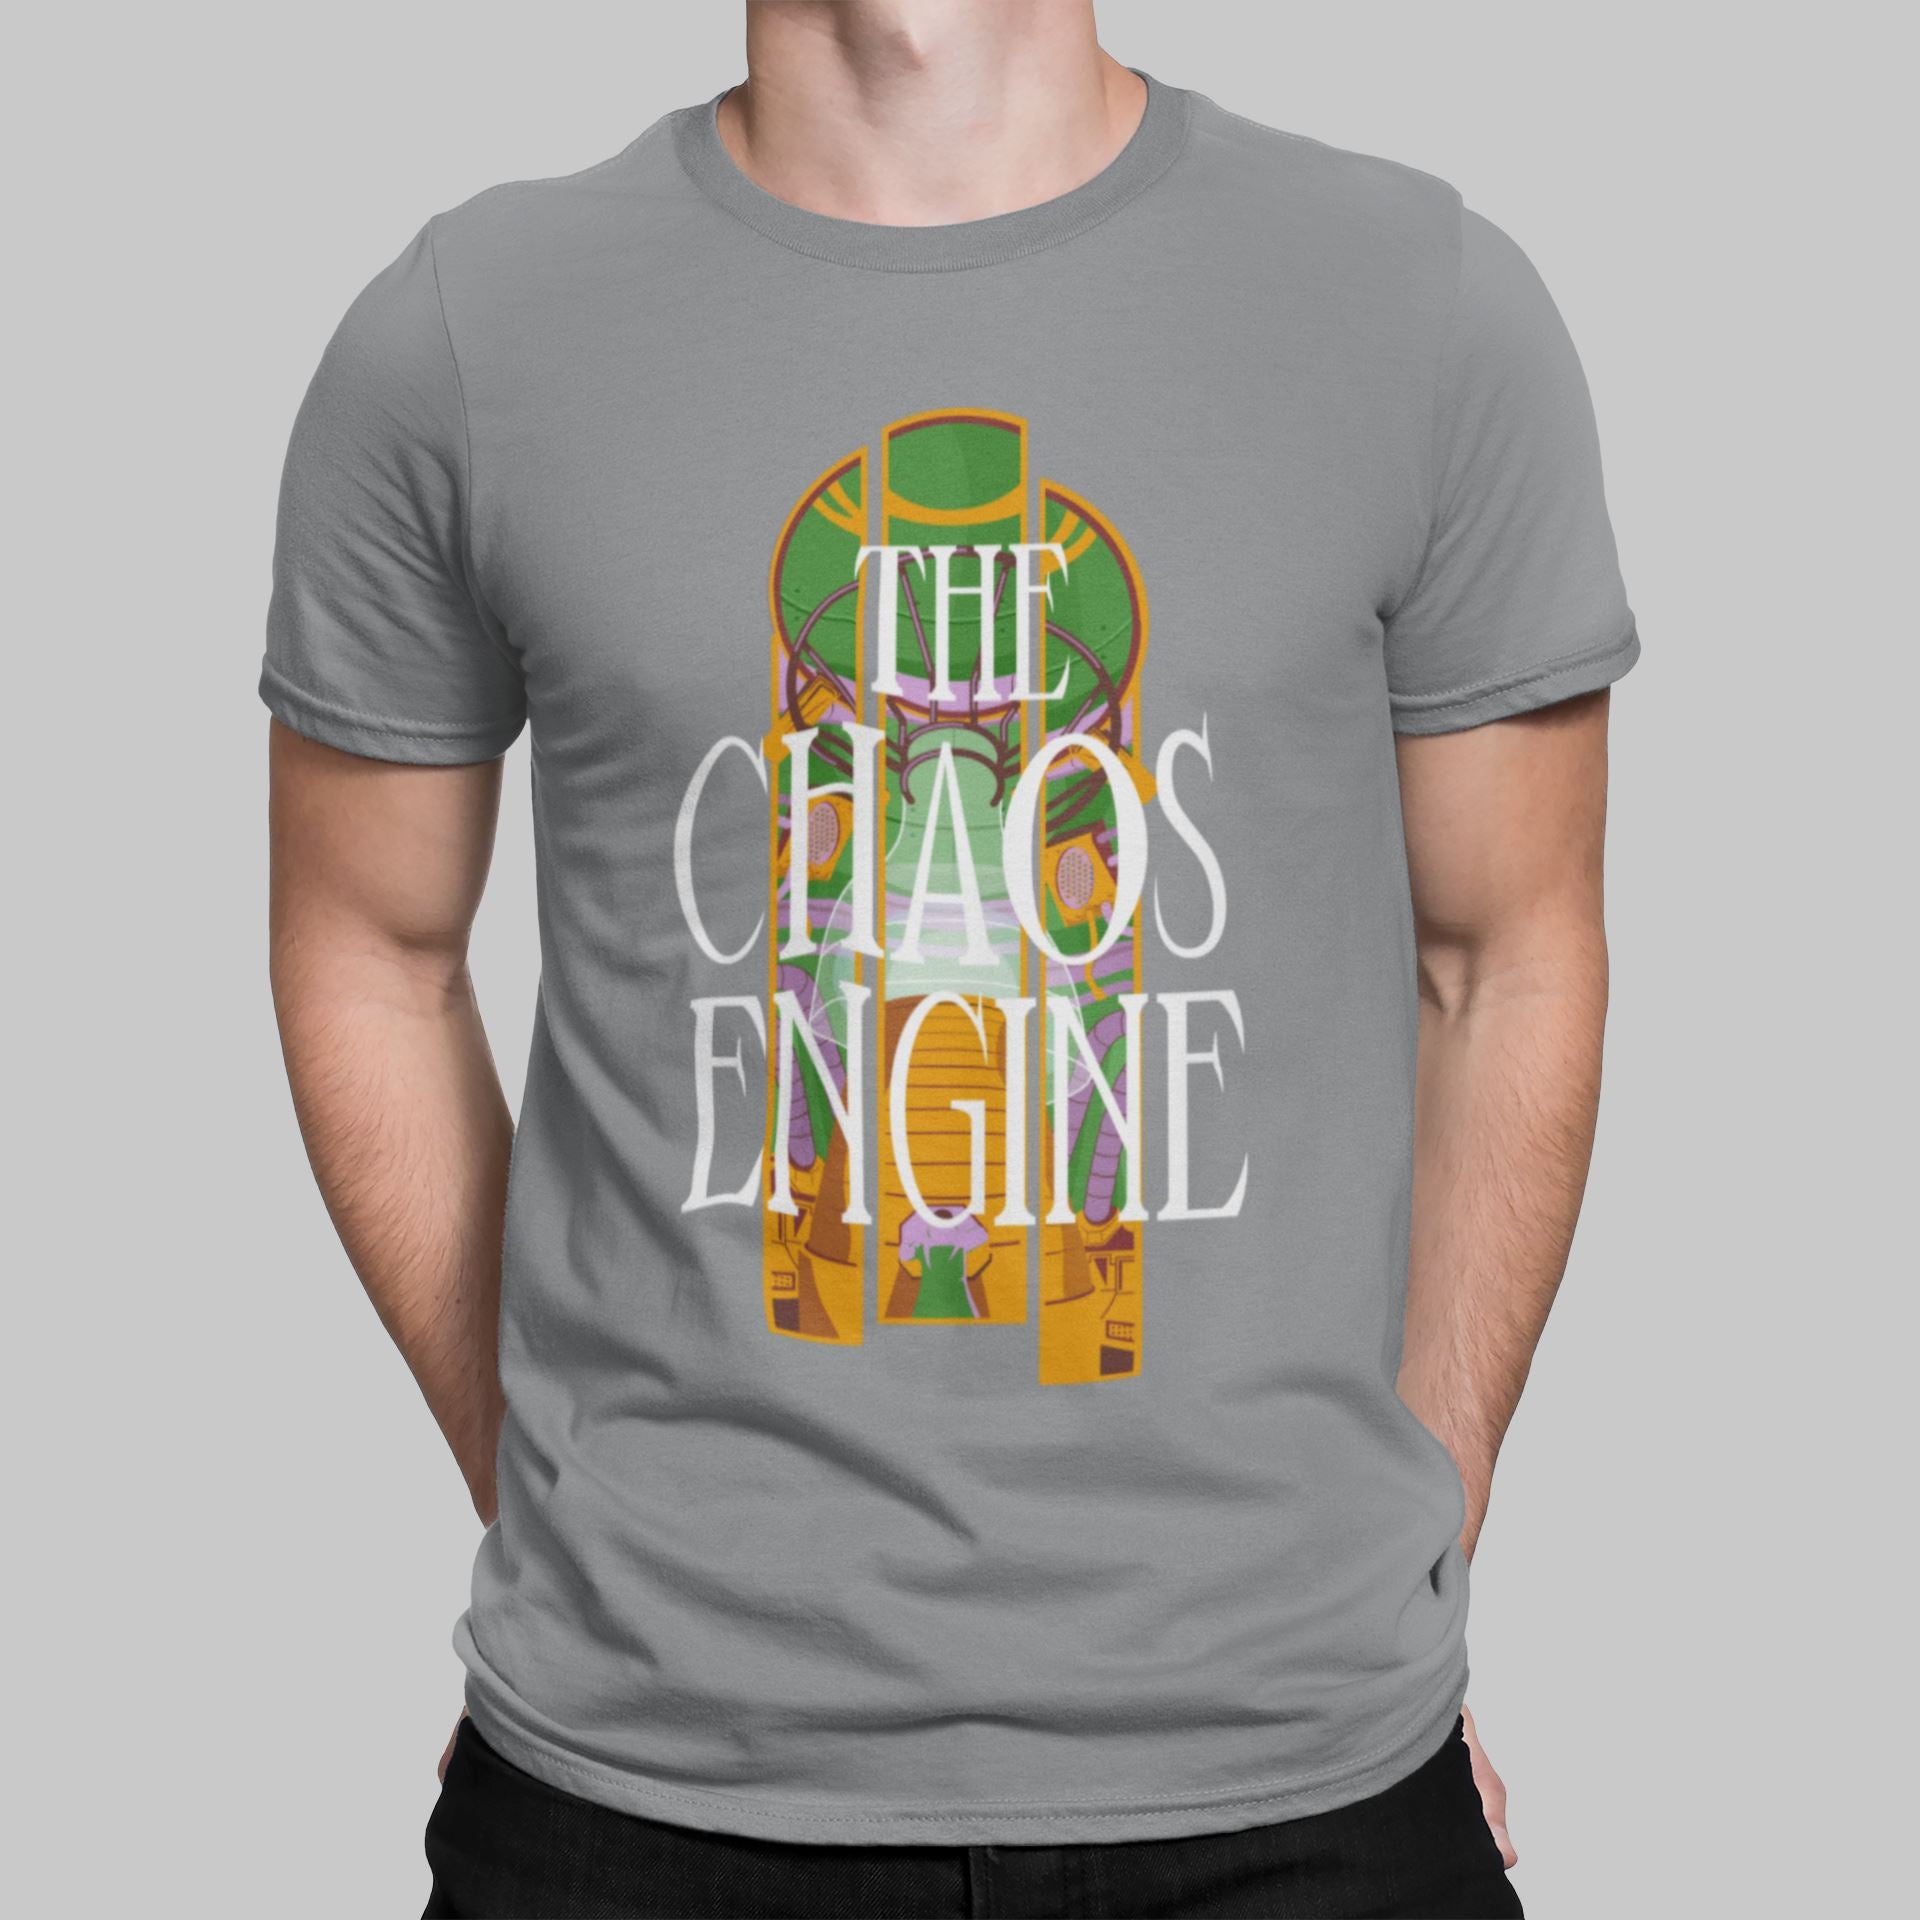 Chaos Engine Retro Gaming T-Shirt T-Shirt Seven Squared Small 34-36" Sport Grey 